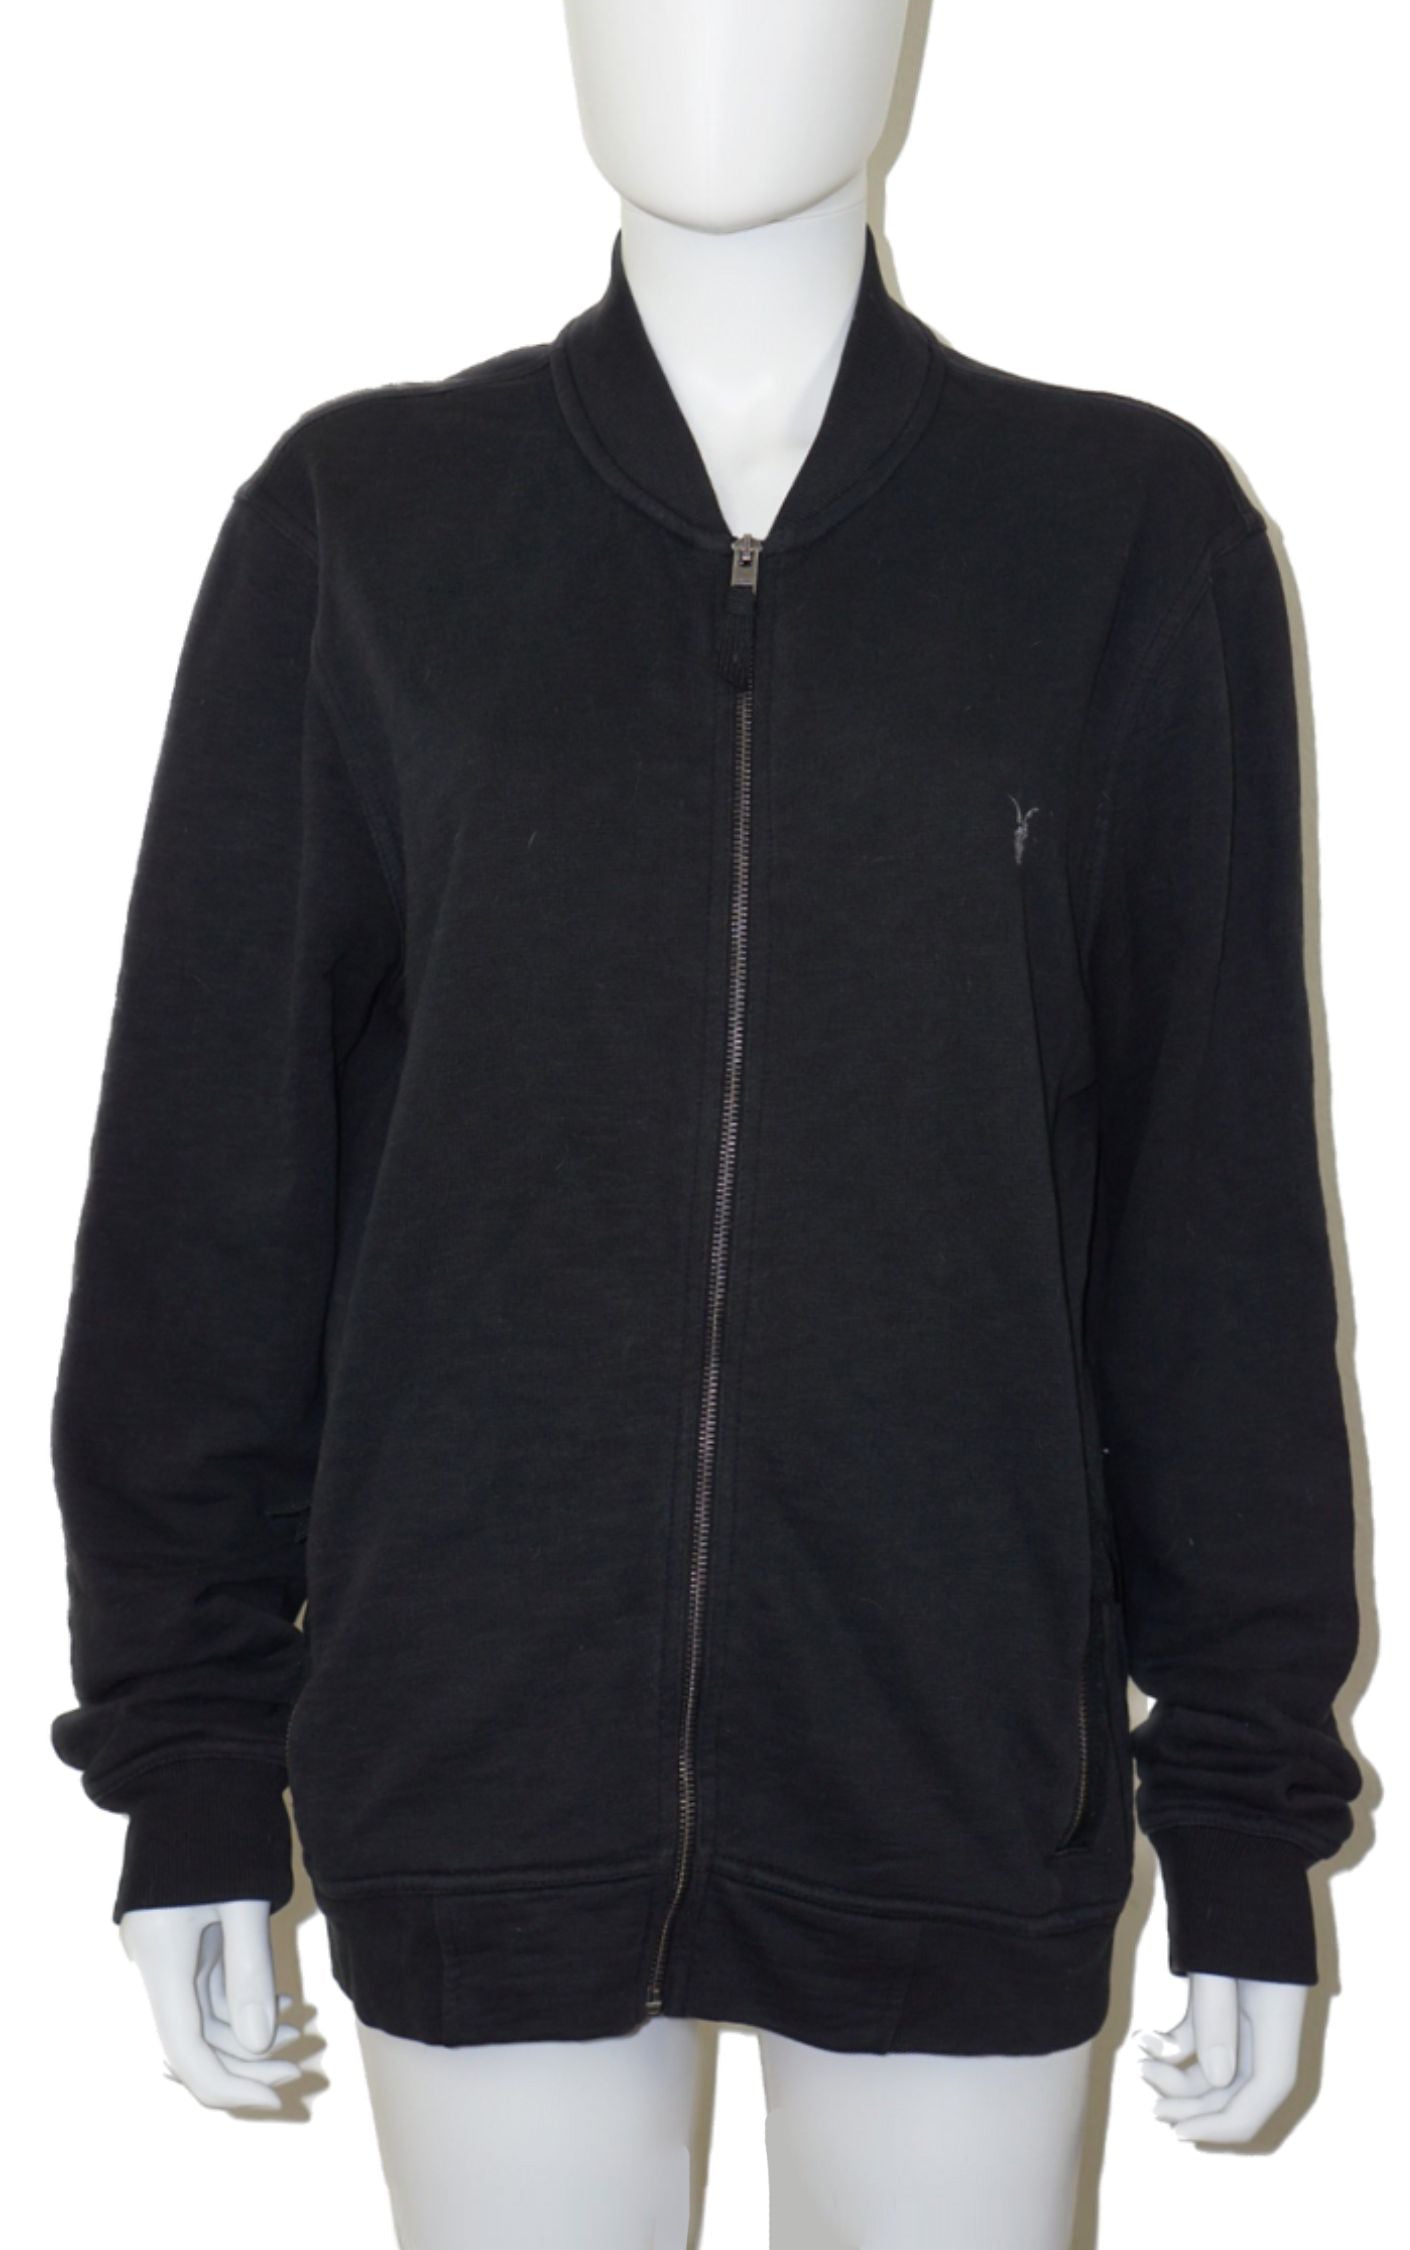 ALL SAINTS Logo Black Zip Up Sweater Jacket resellum